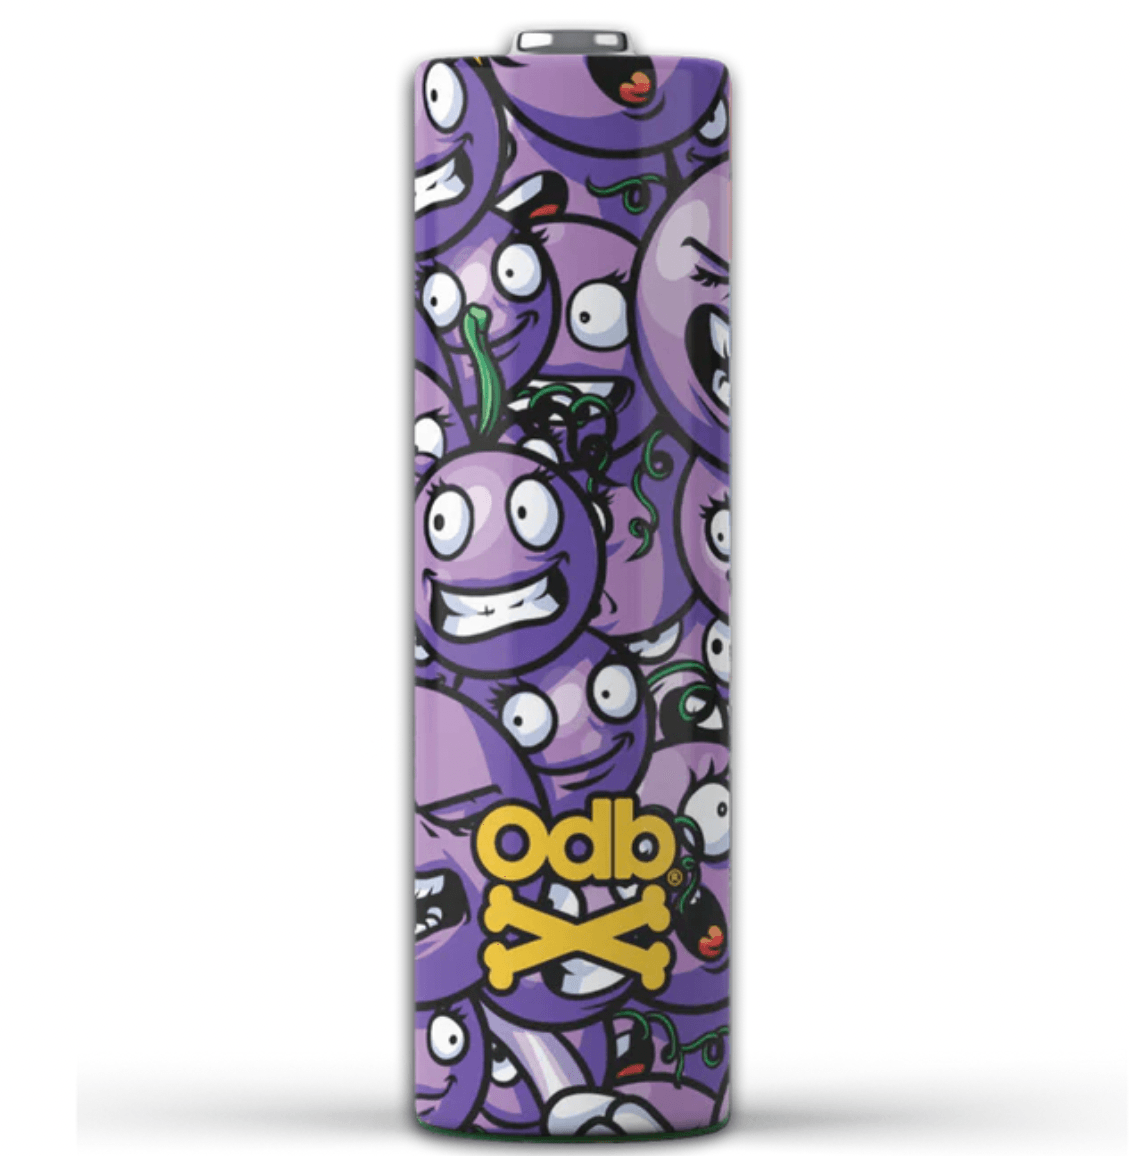 Grapes - ODB 18650 Battery Wrap, [product_vandor]